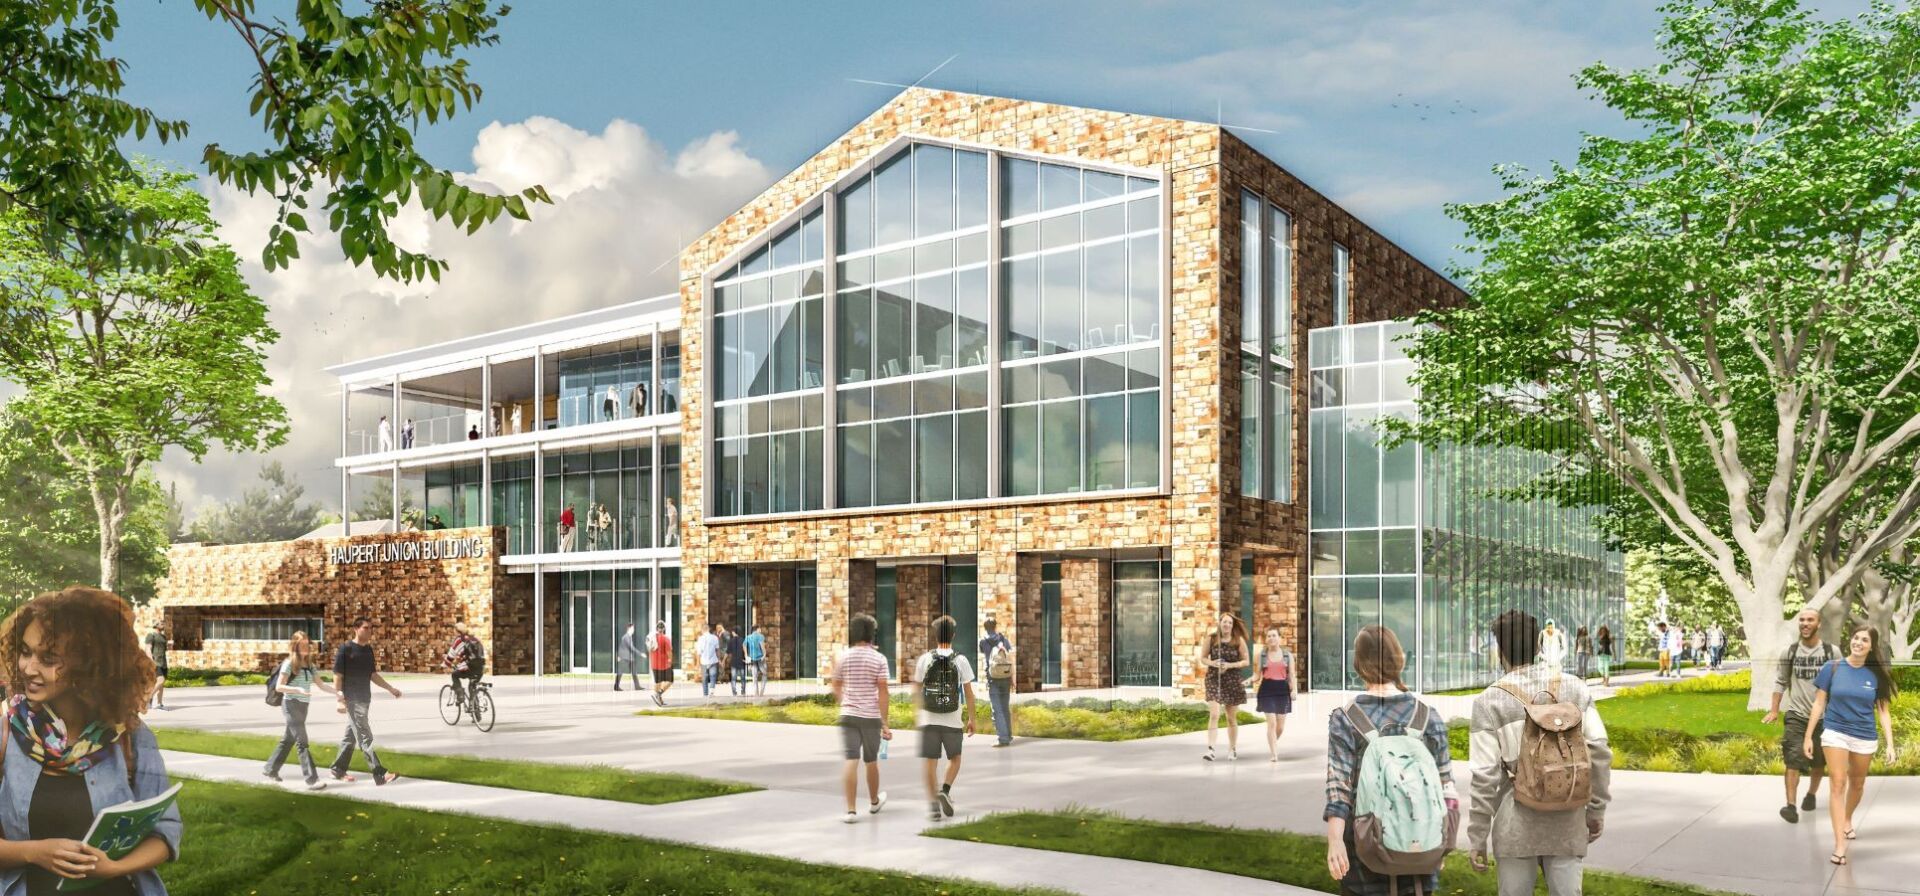 Moravian University Haupert Union Building (HUB) preconstruction rendering by Earl Swensson Associates, Inc.